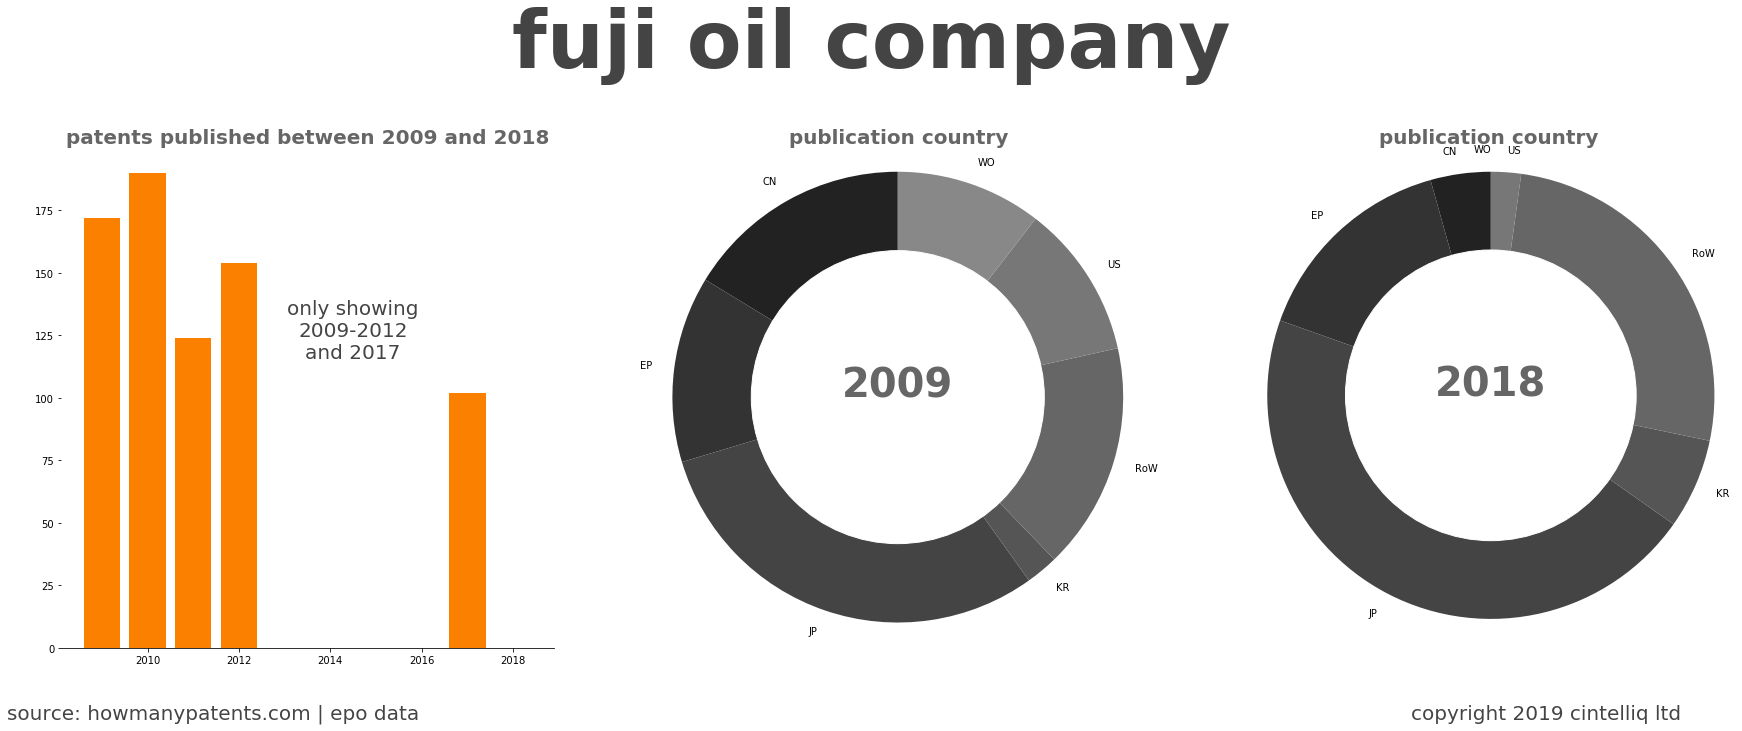 summary of patents for Fuji Oil Company